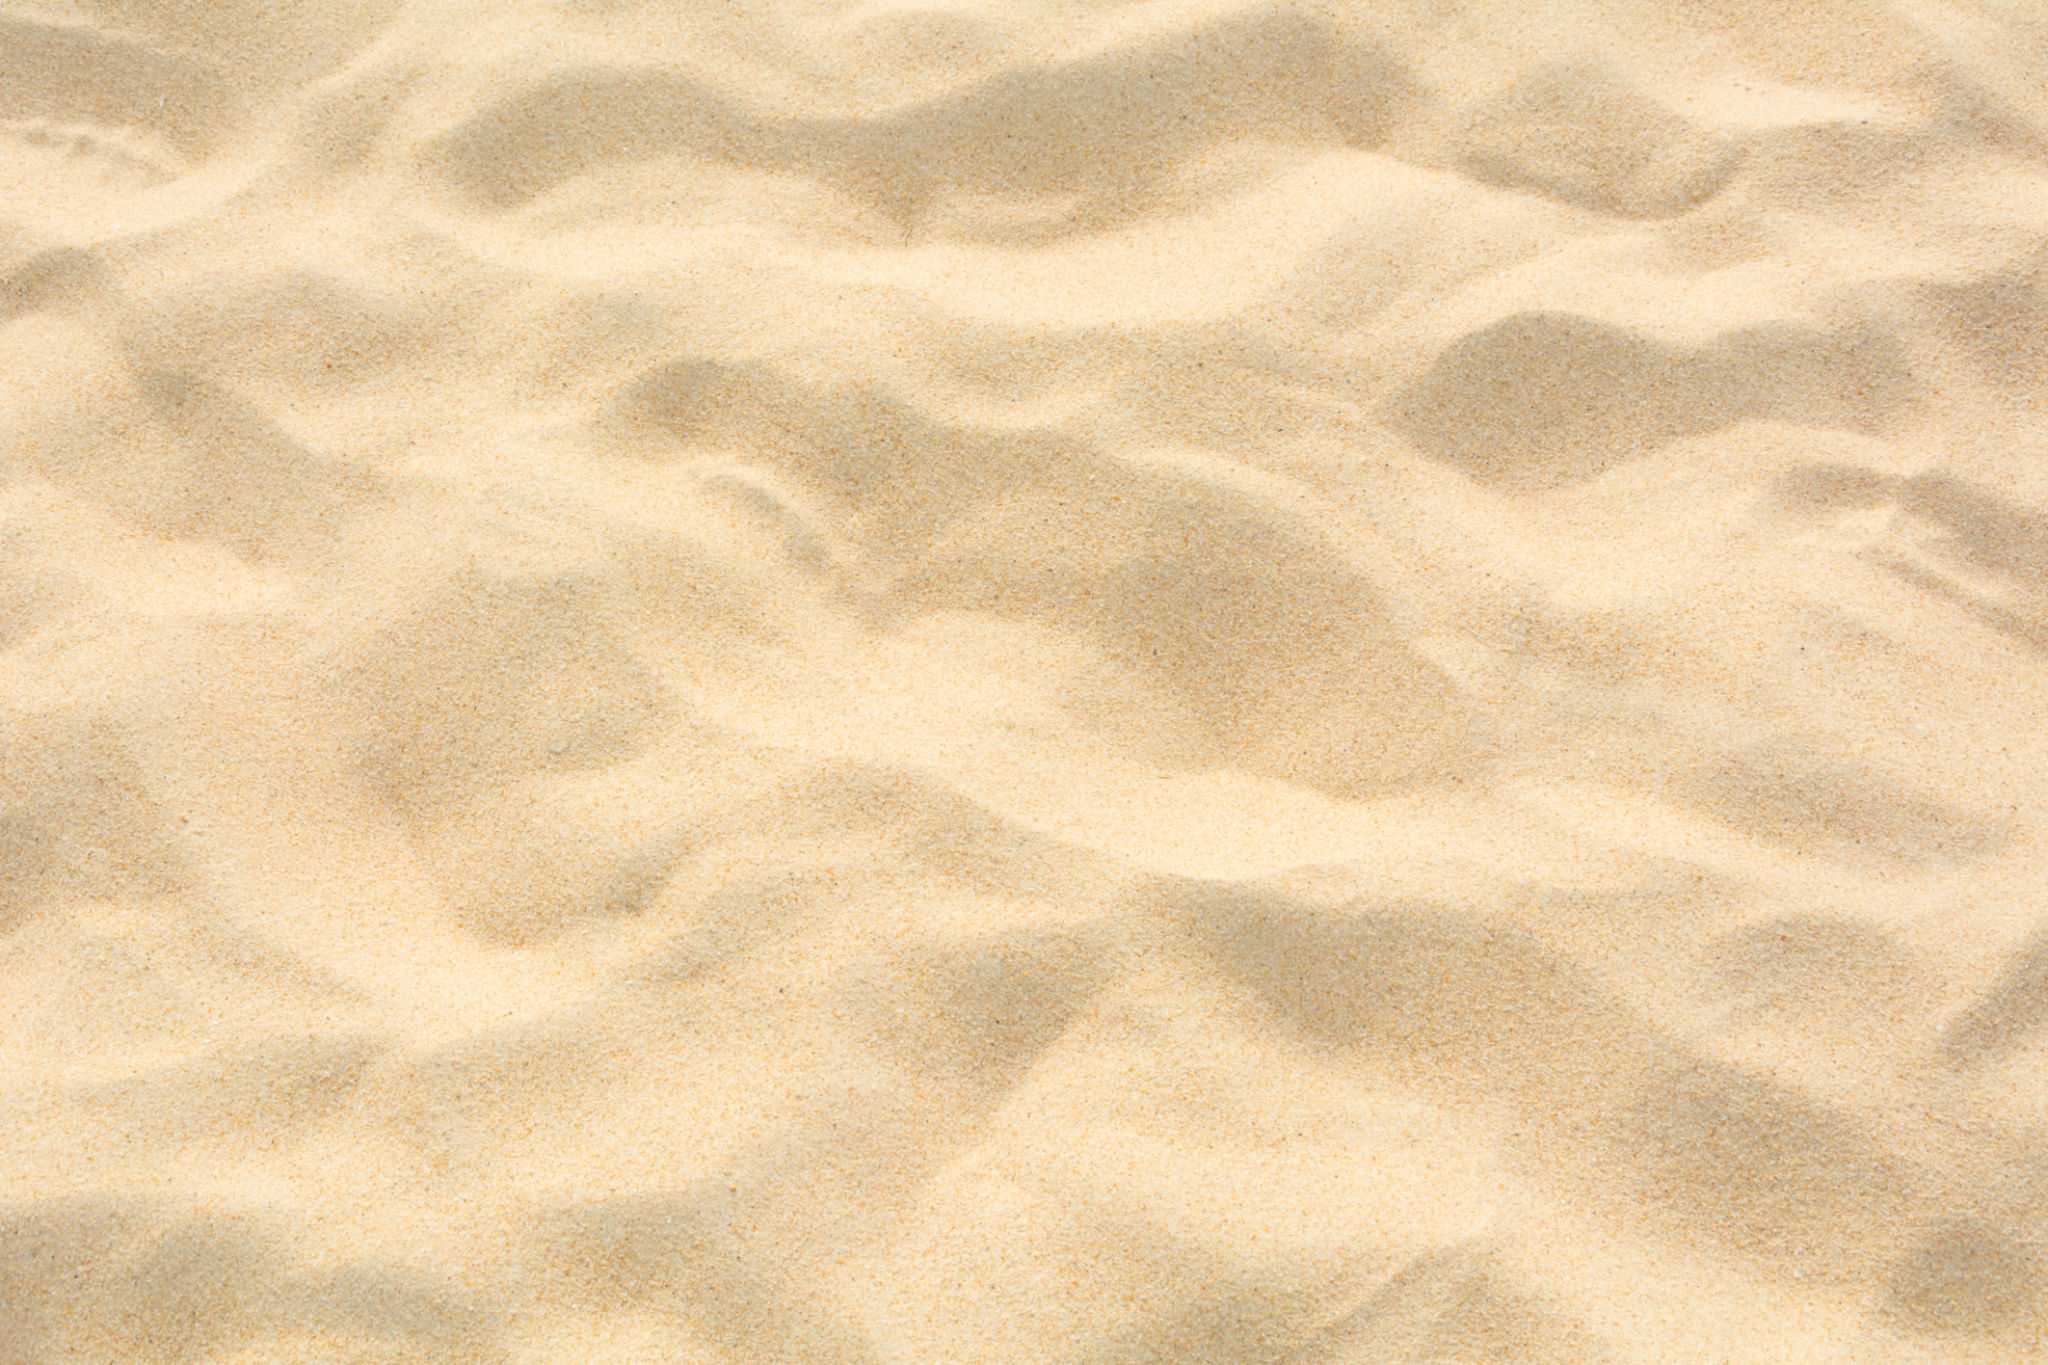 стихотворение про песок